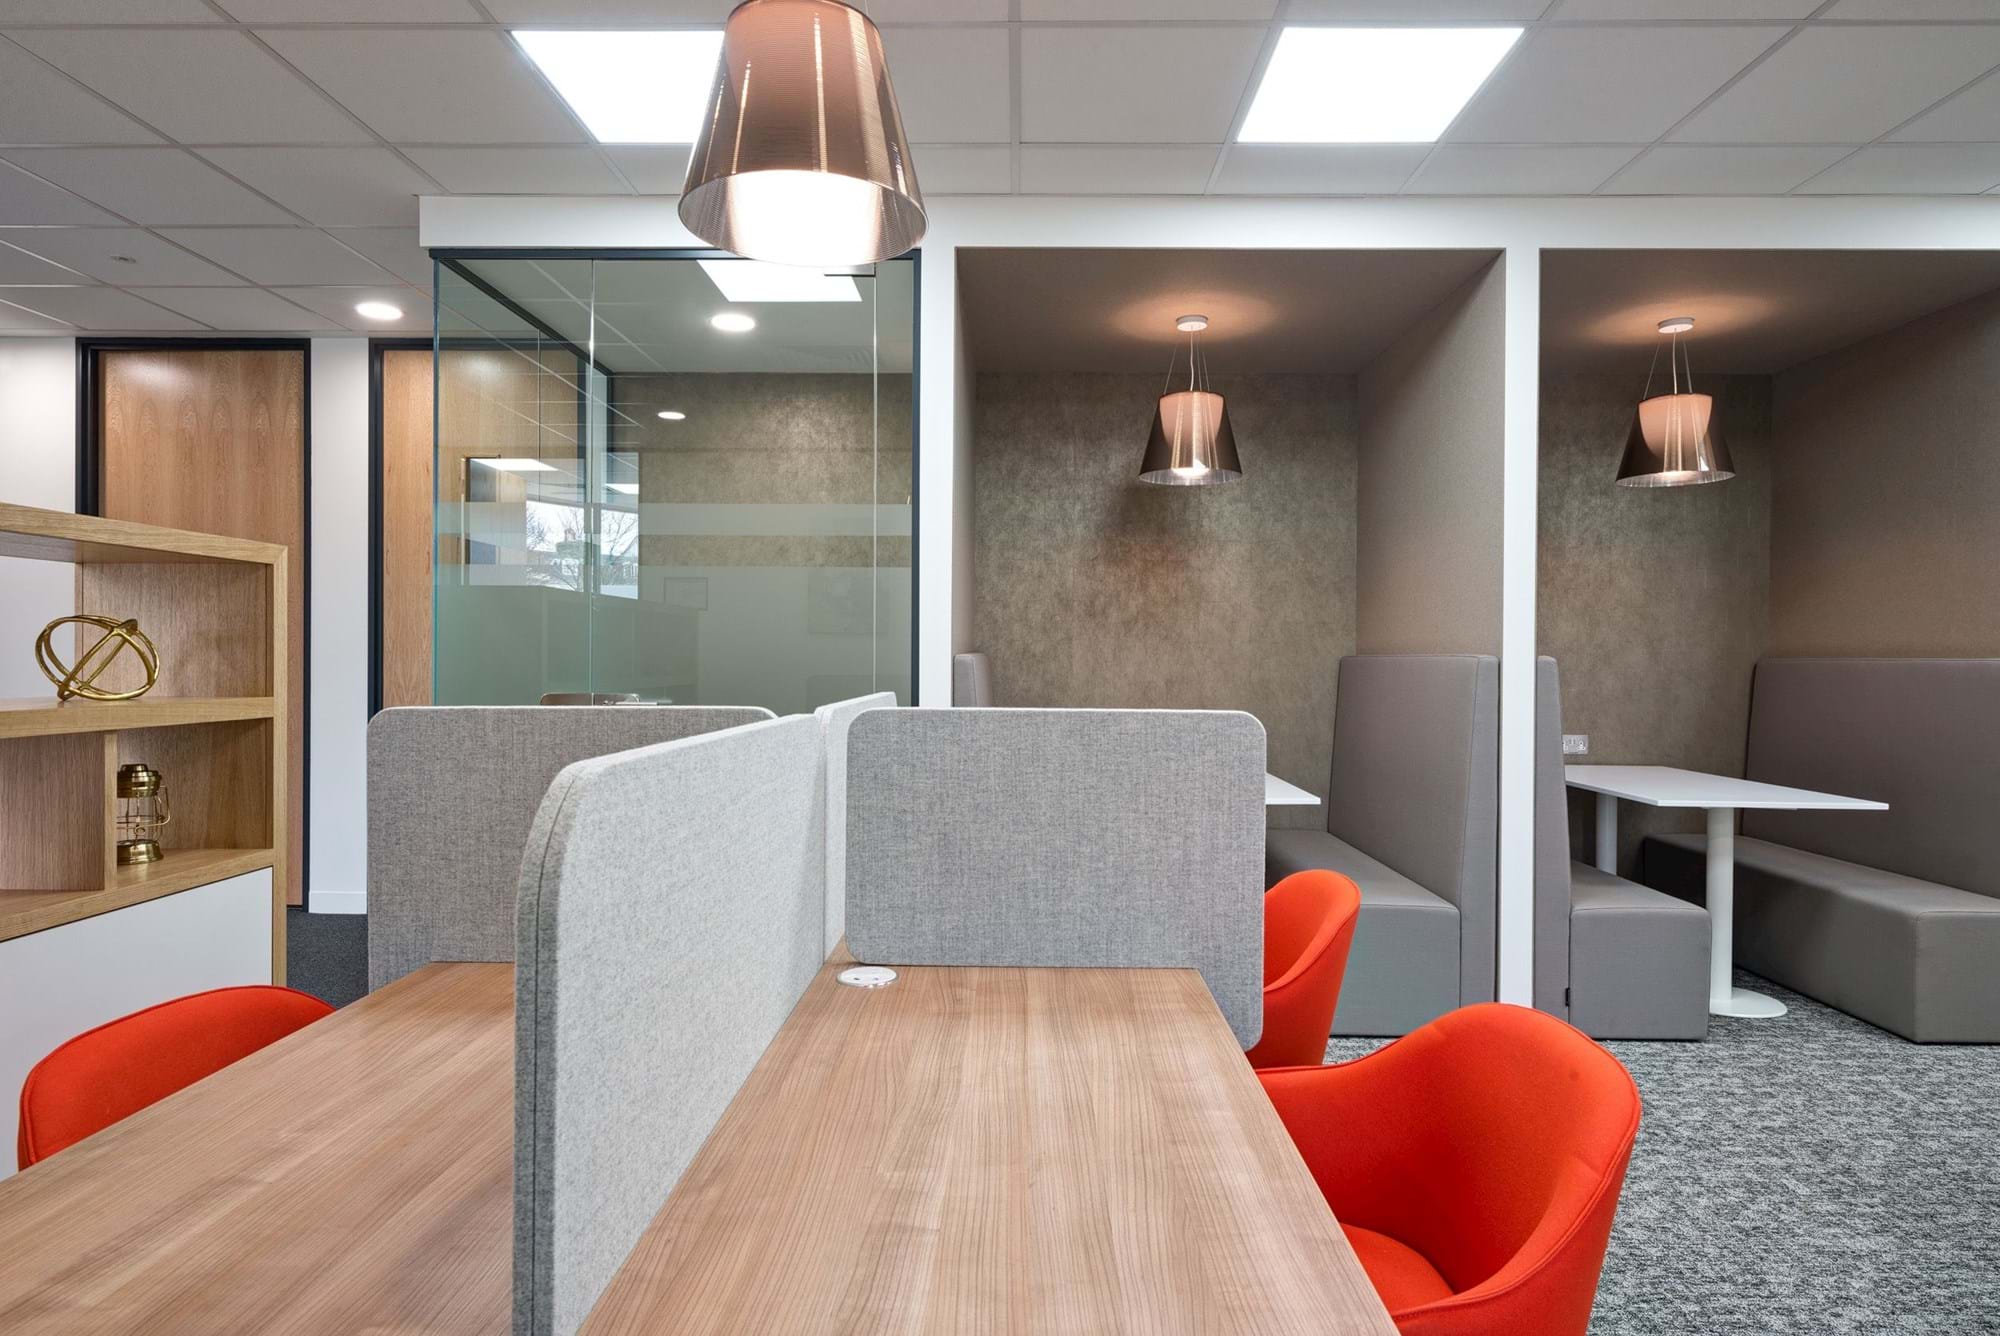 Modus Workspace office design, fit out and refurbishment - Regus Ashford - Regus Ashford 07 highres sRGB.jpg